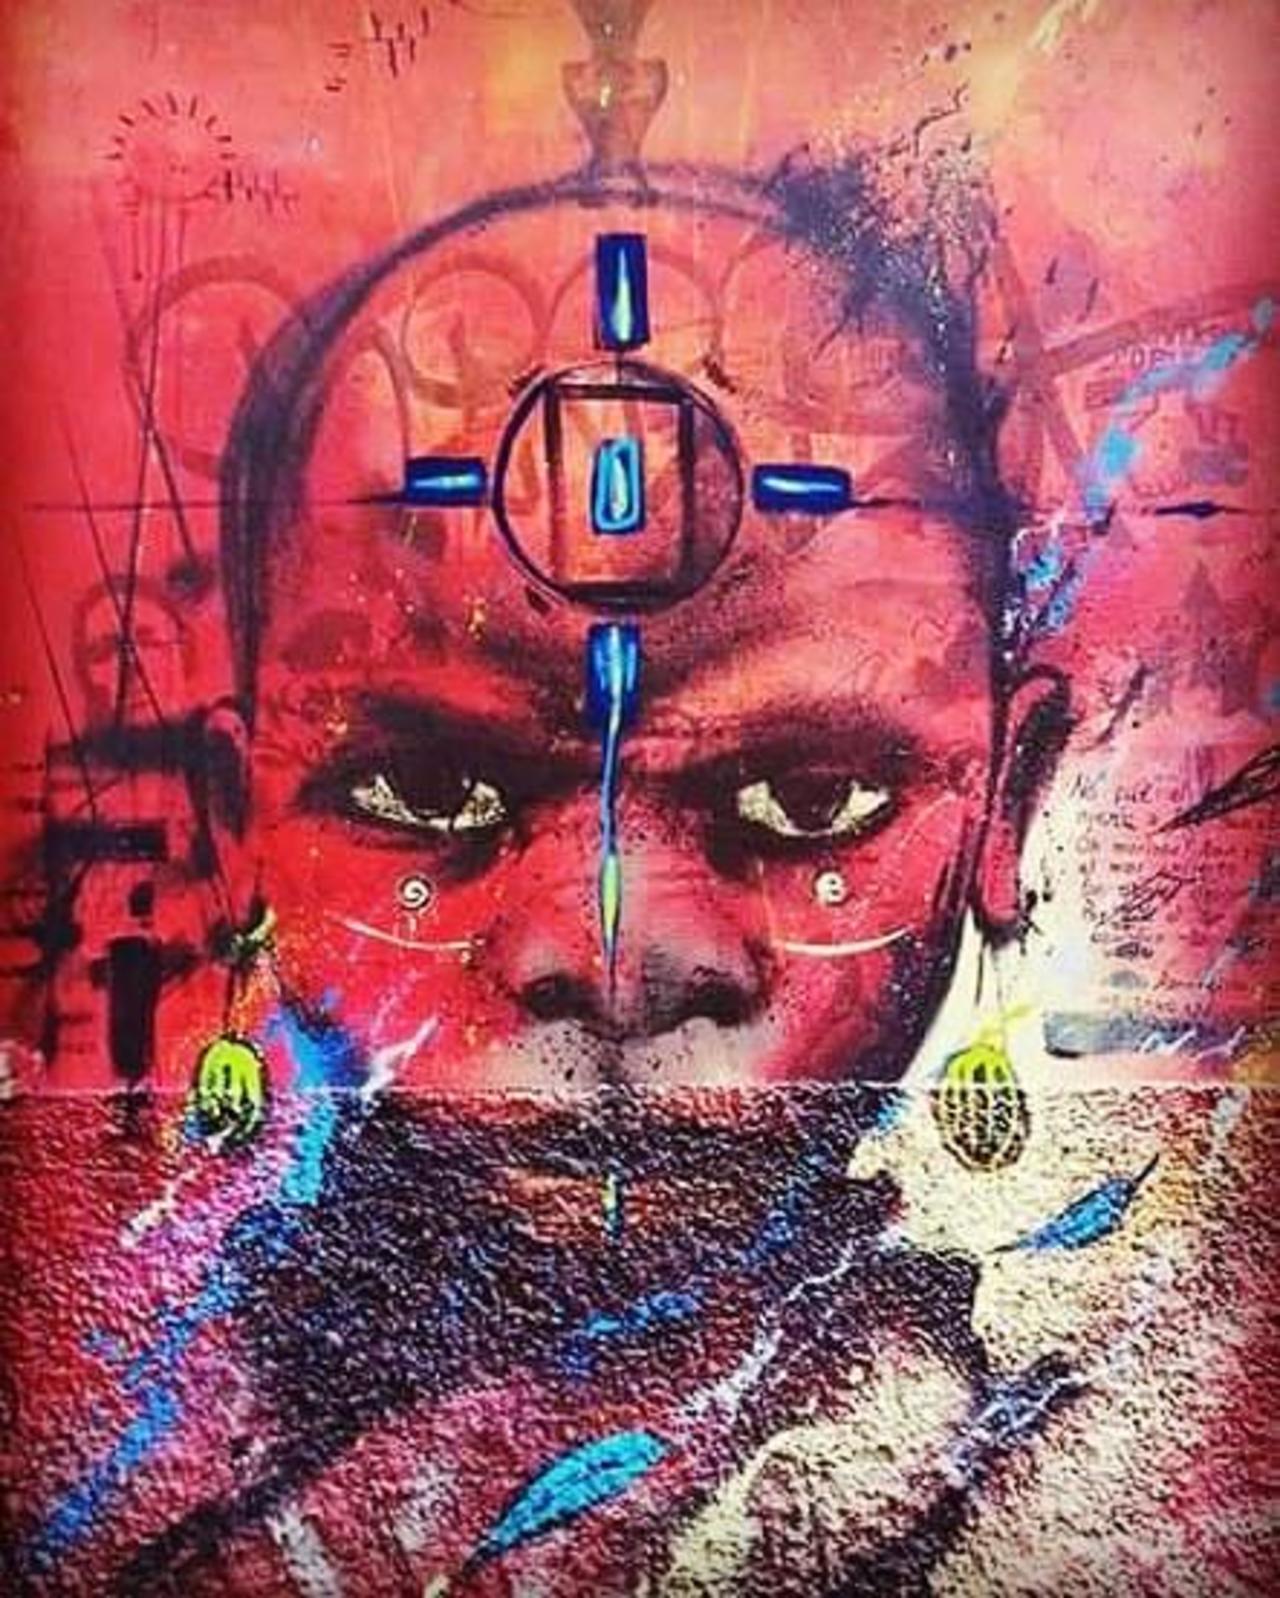 RT @artpushr: via #major_thom "http://bit.ly/1MiwP4D" #graffiti #streetart http://t.co/Sf0Tt2Wh6G